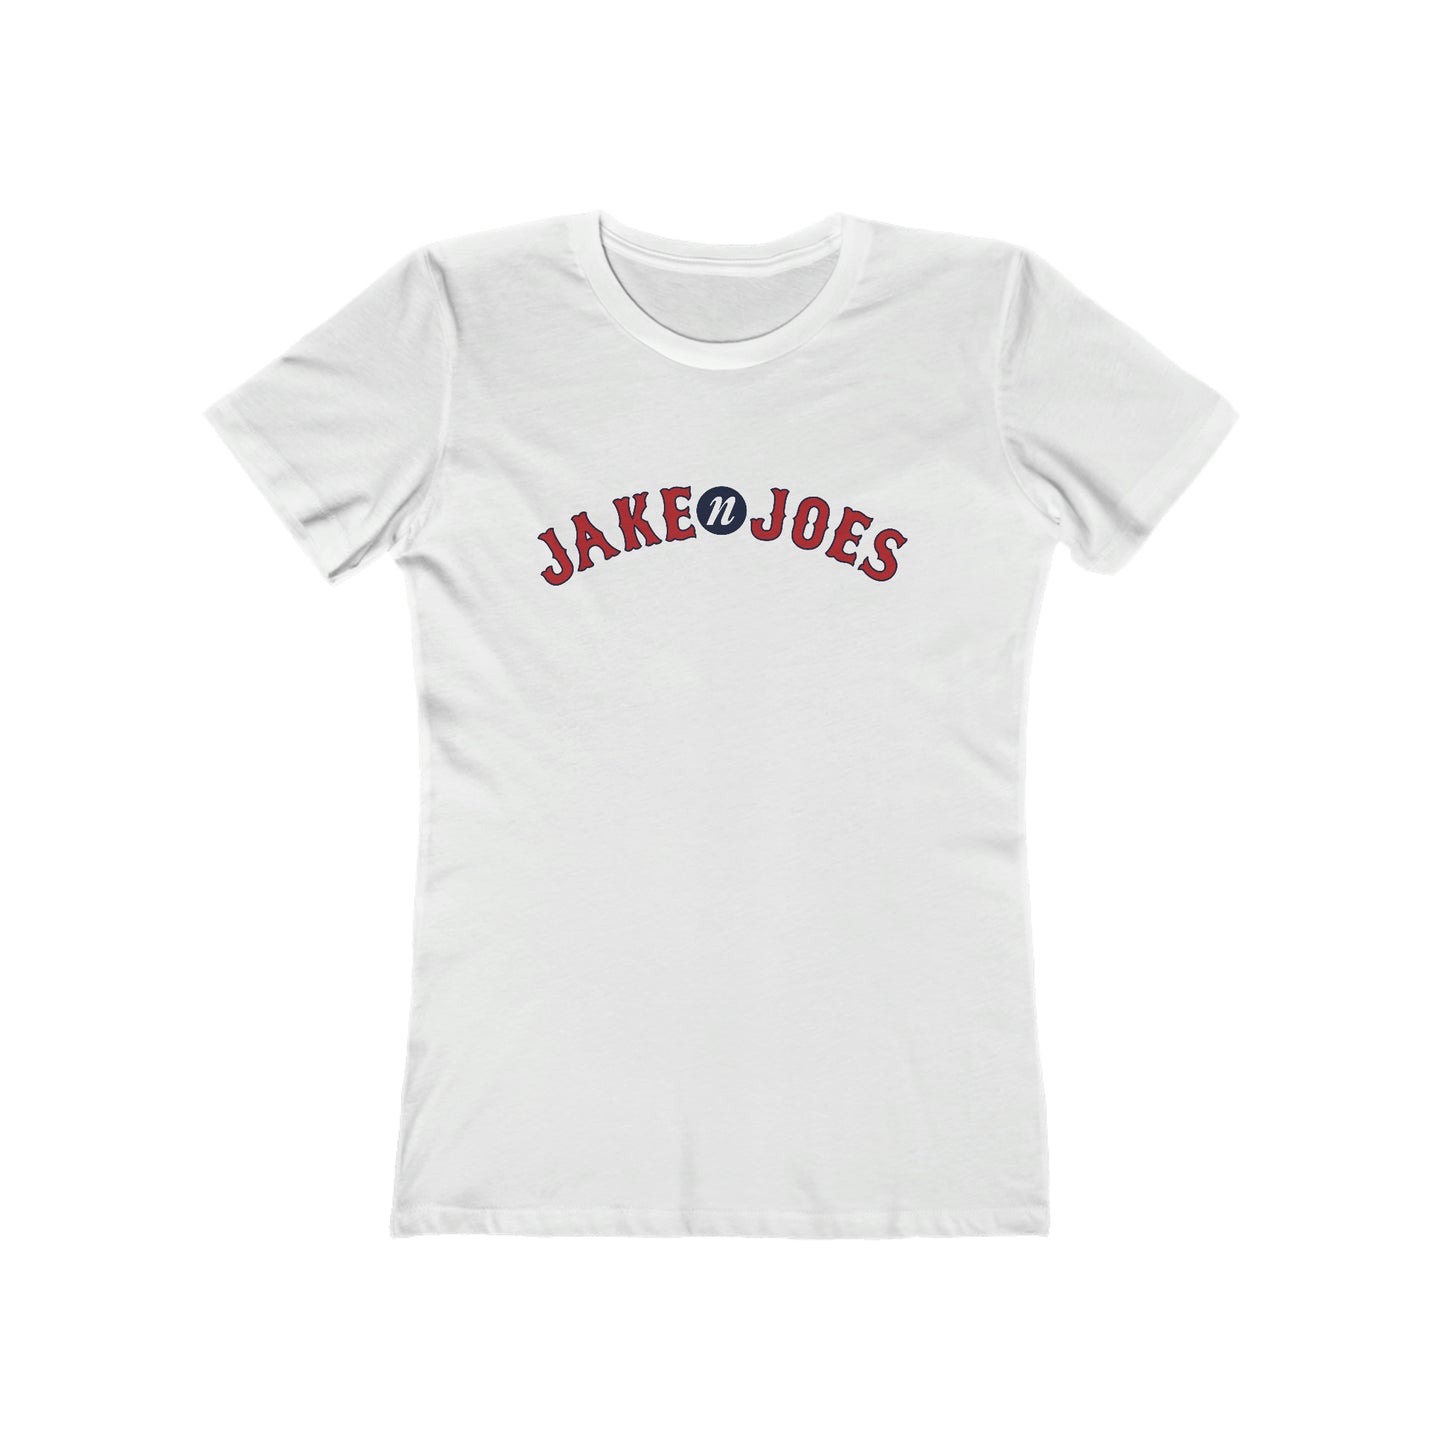 Jake n JOES Women's T-Shirt